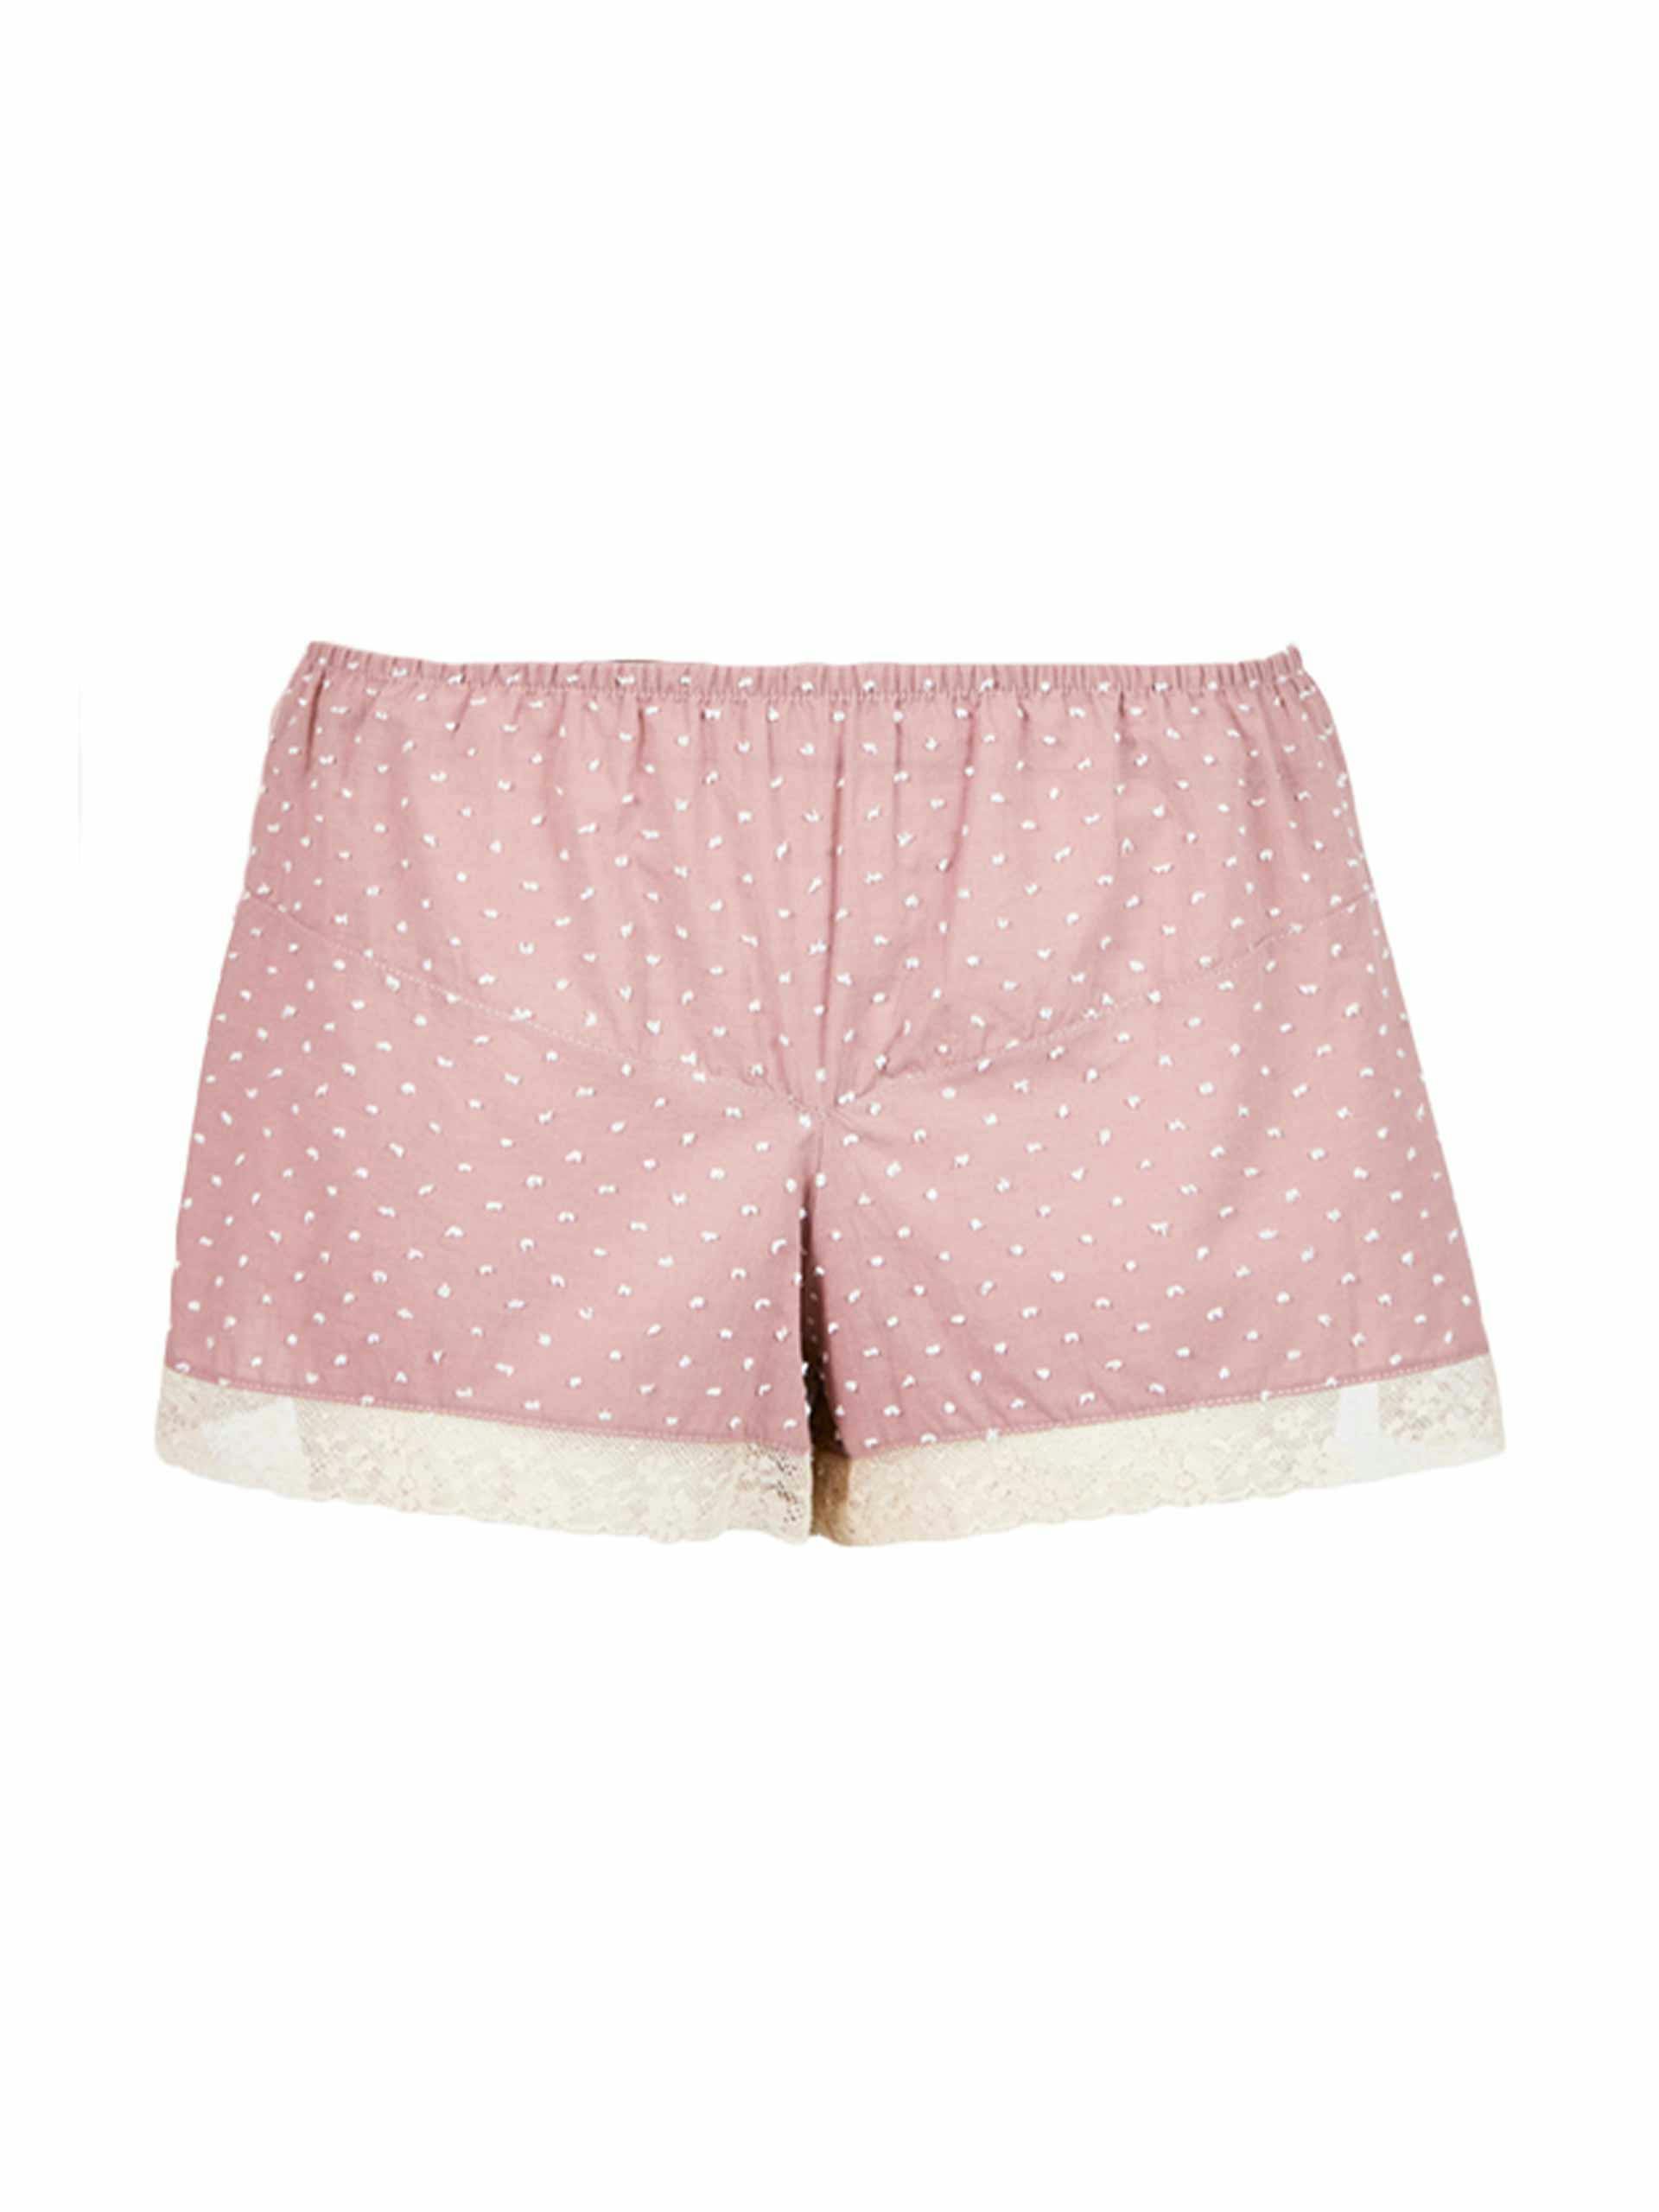 Pink and white polka dot beatriz cotton shorts